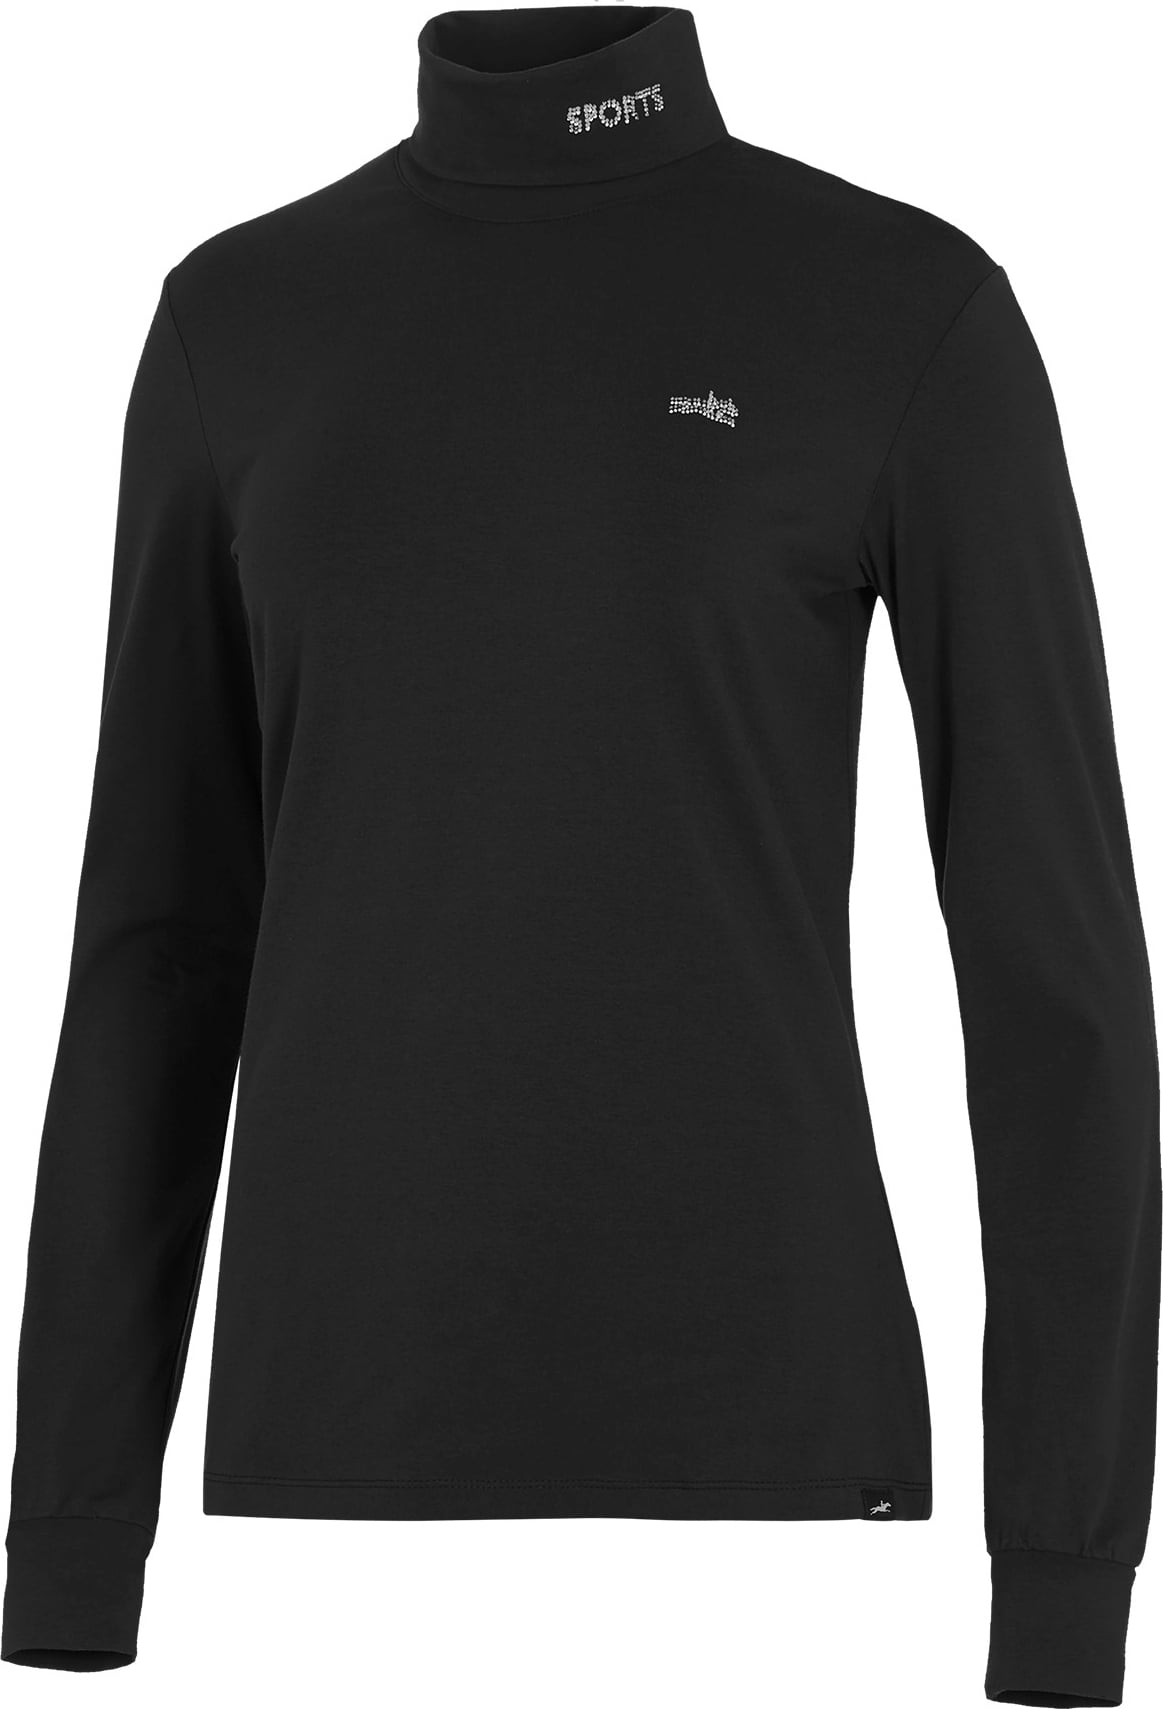 schockemoehle-sports-fleece-shirt-amber-style-black-756881-nl